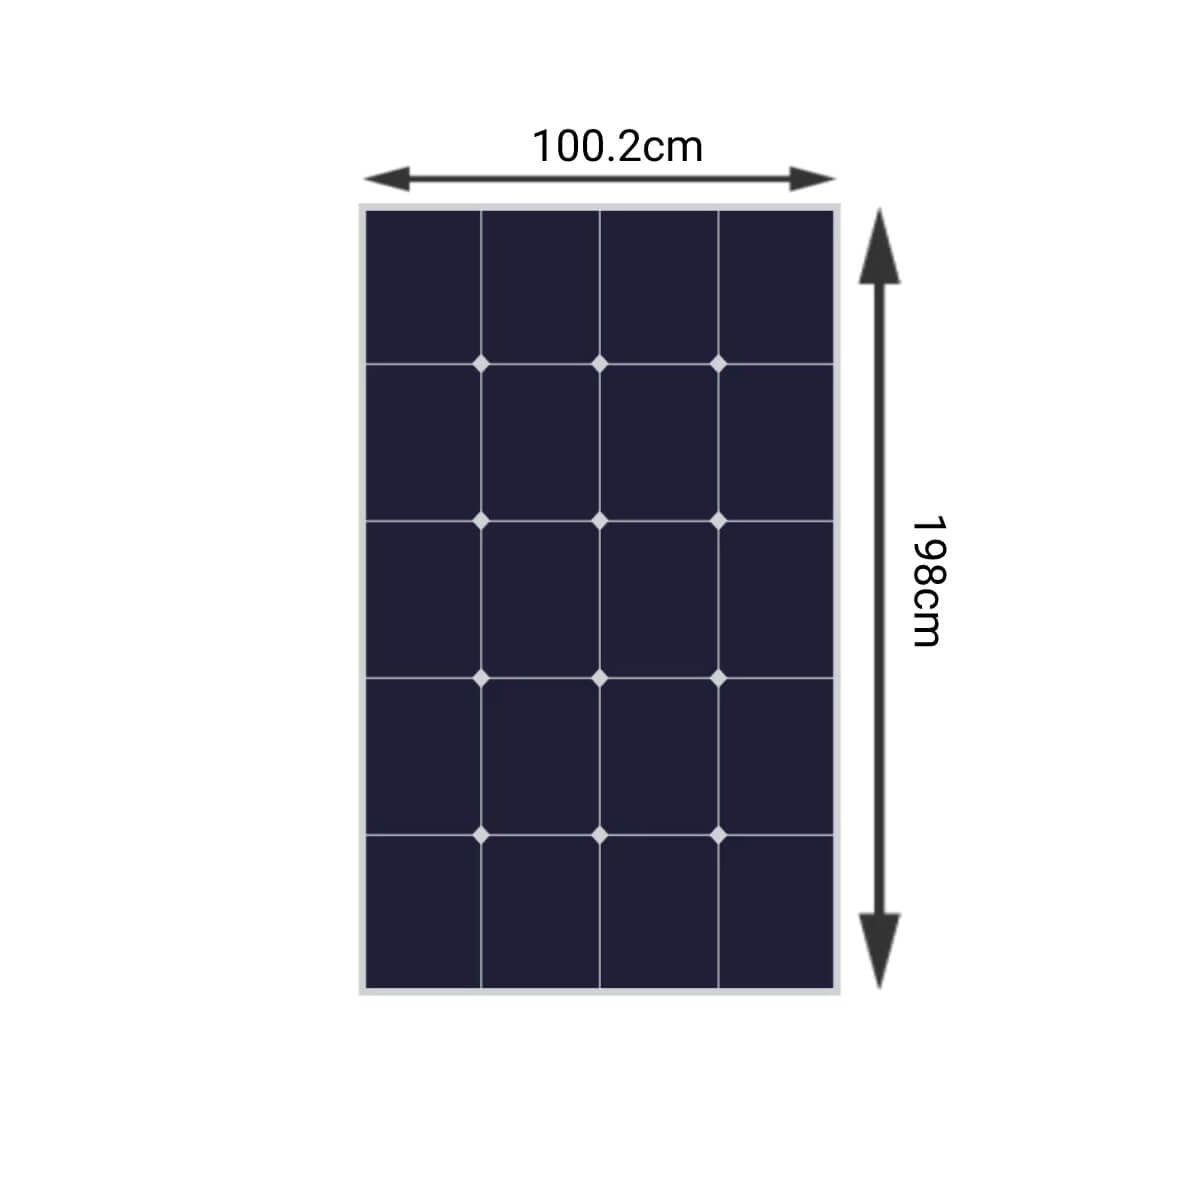 720W Solar Panel Kit – 2x 360W dimensions